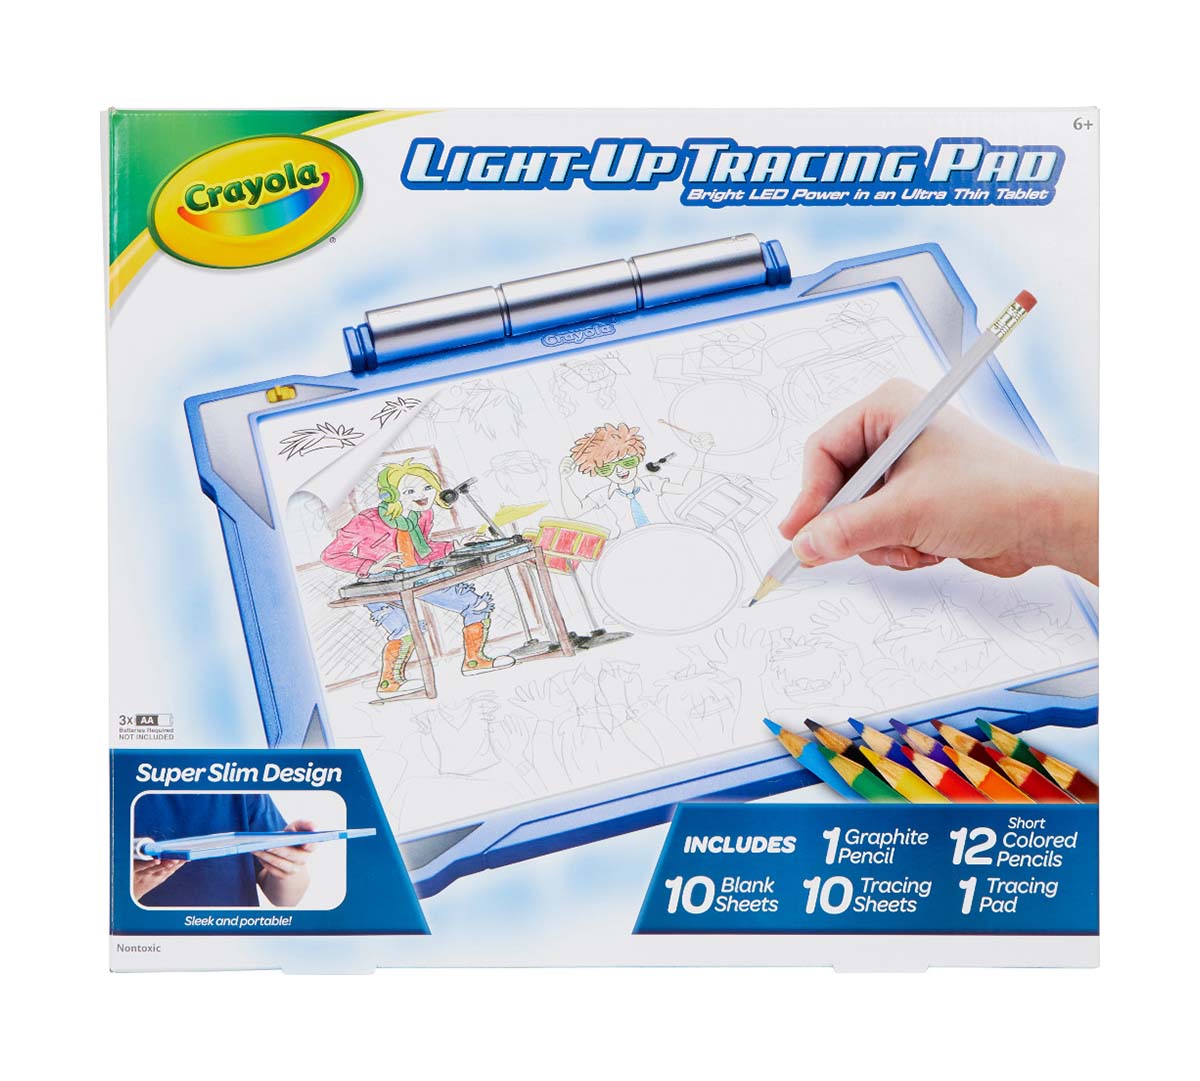 Blue Light-Up Tracing Pad, Gift for Boys, Crayola.com